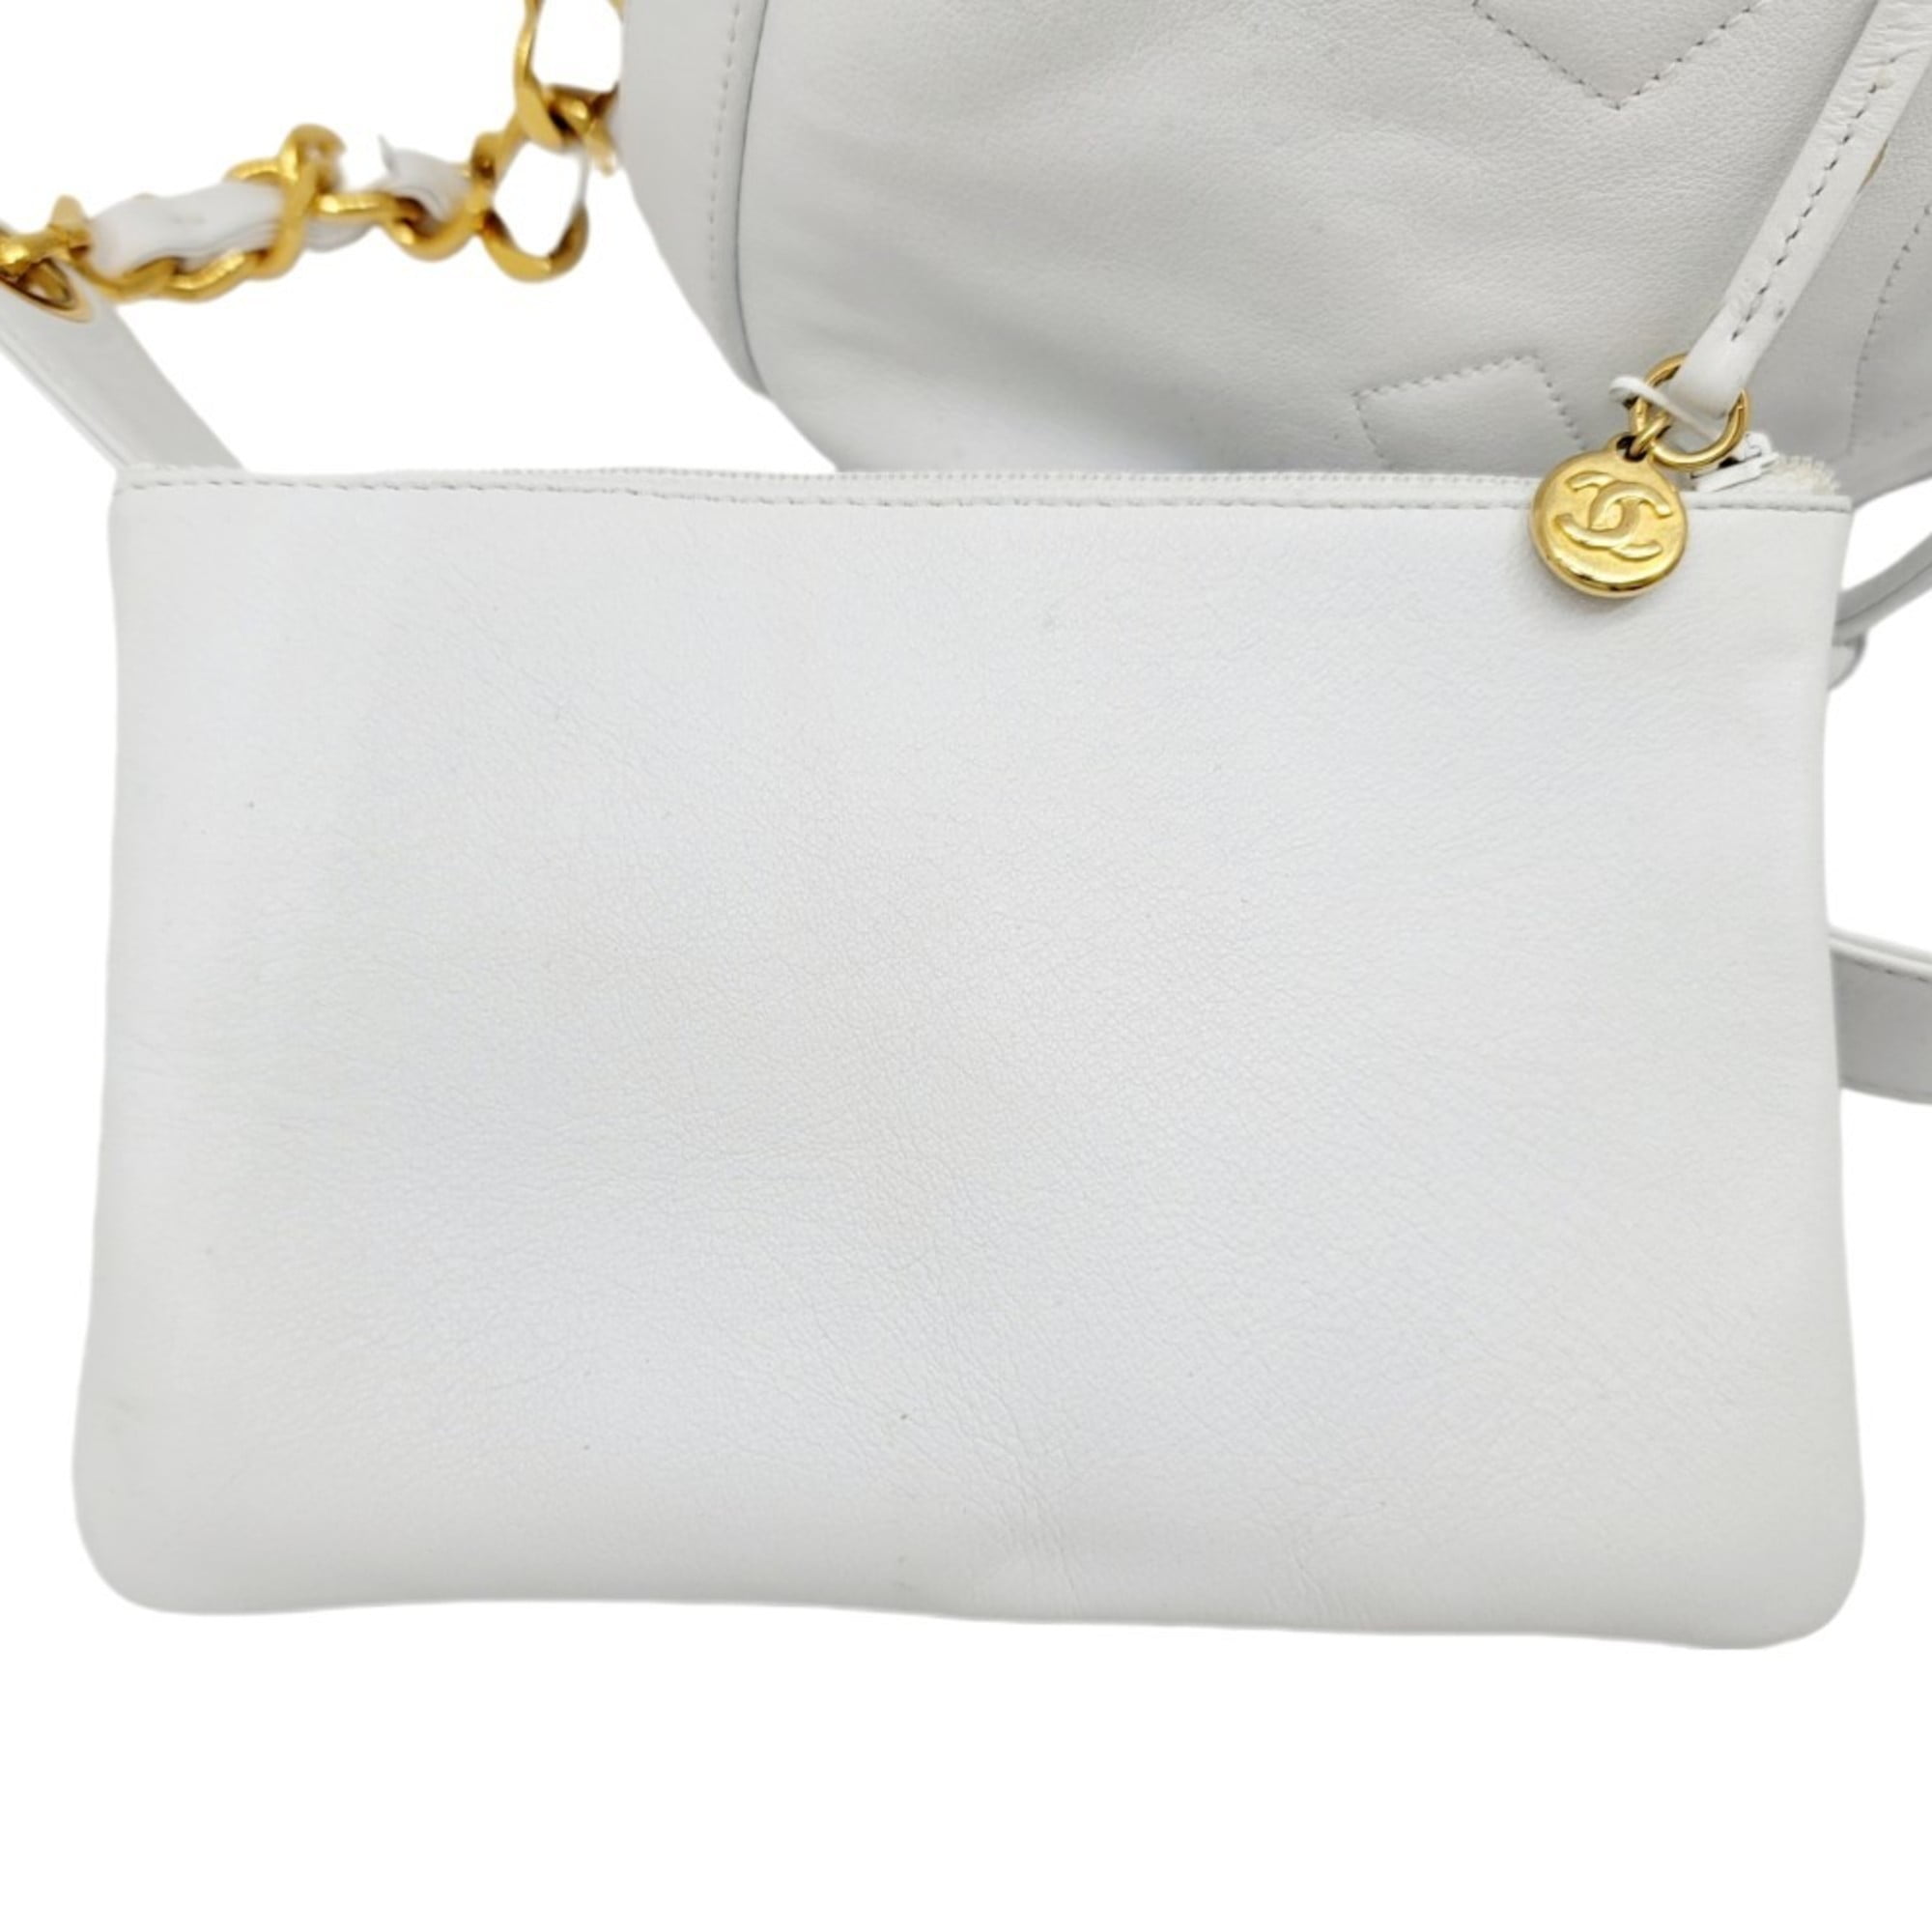 CHANEL Chanel drawstring shoulder one bag white gold metal fittings G leather  handbag ladies